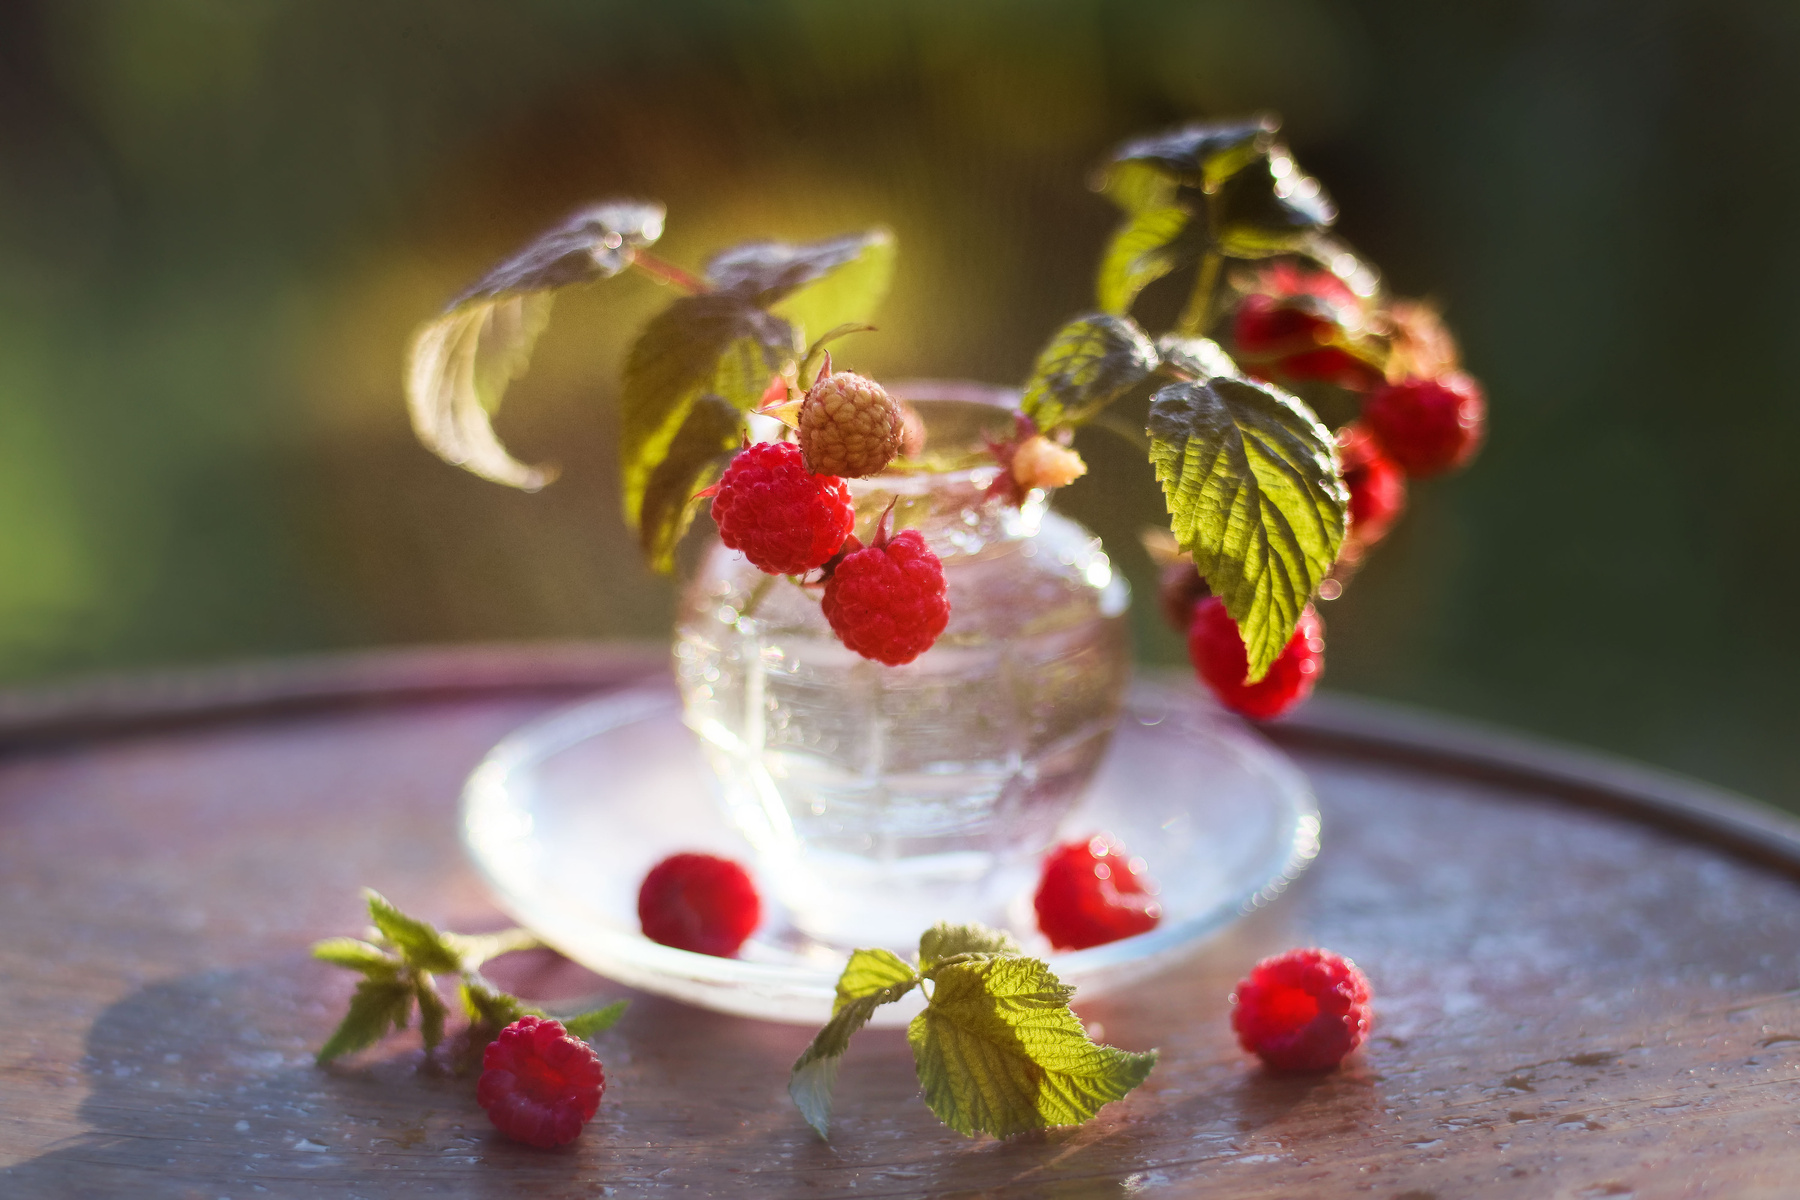 Малинка Июль ягода малина урожай аромат лето вкусно свет солнце закат